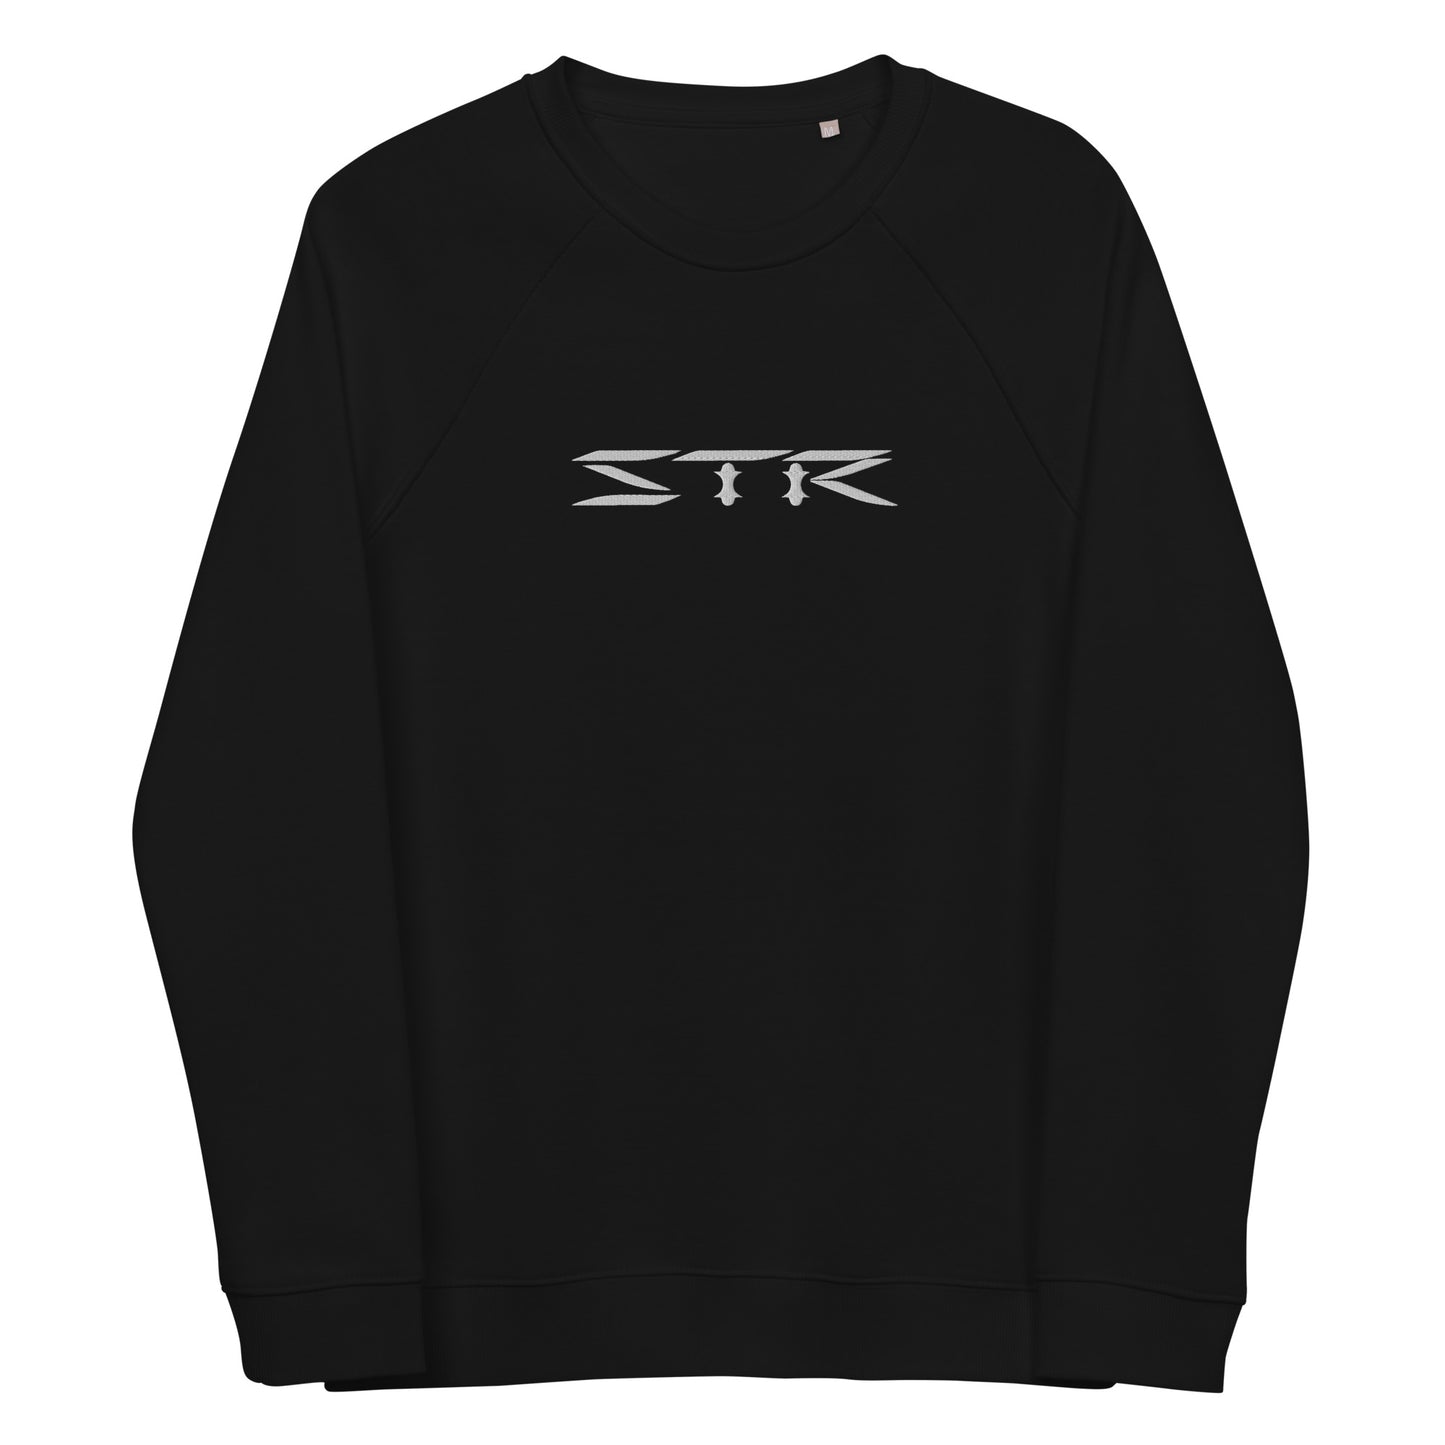 STR Sweatshirt